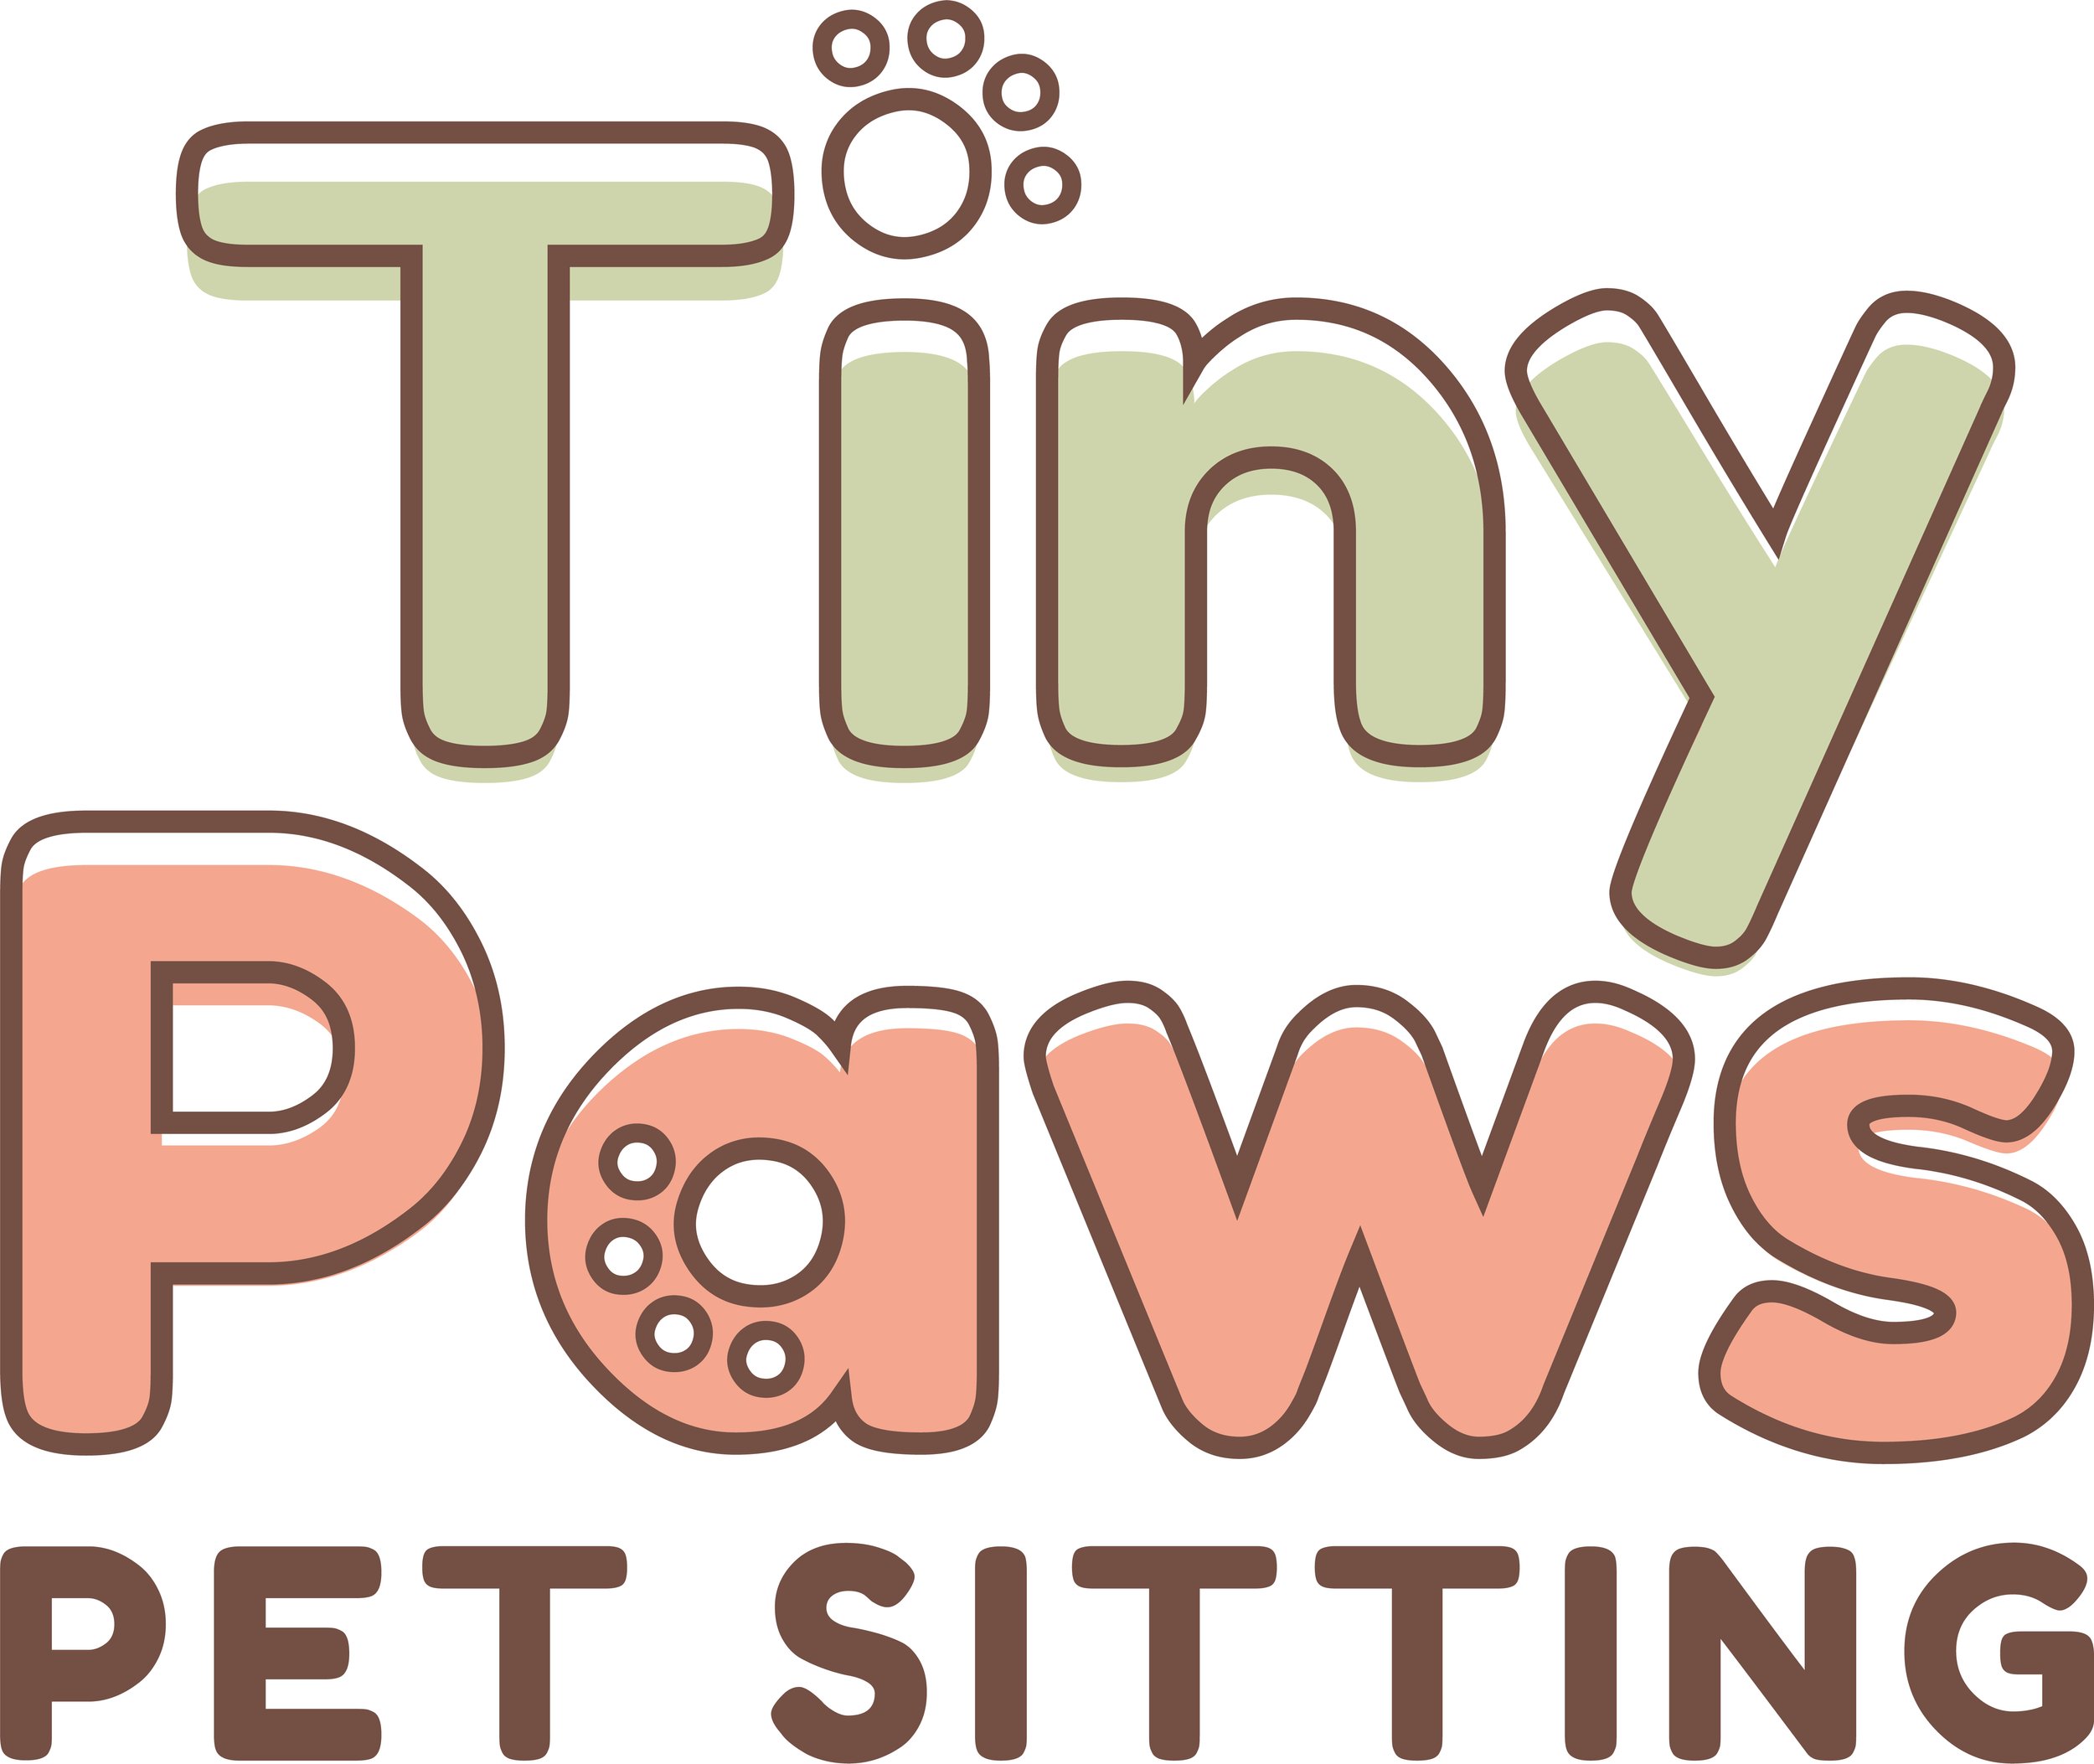  Tiny Paws Pet Sitting - Monument, CO   https://tinypawspetsitting.com/  